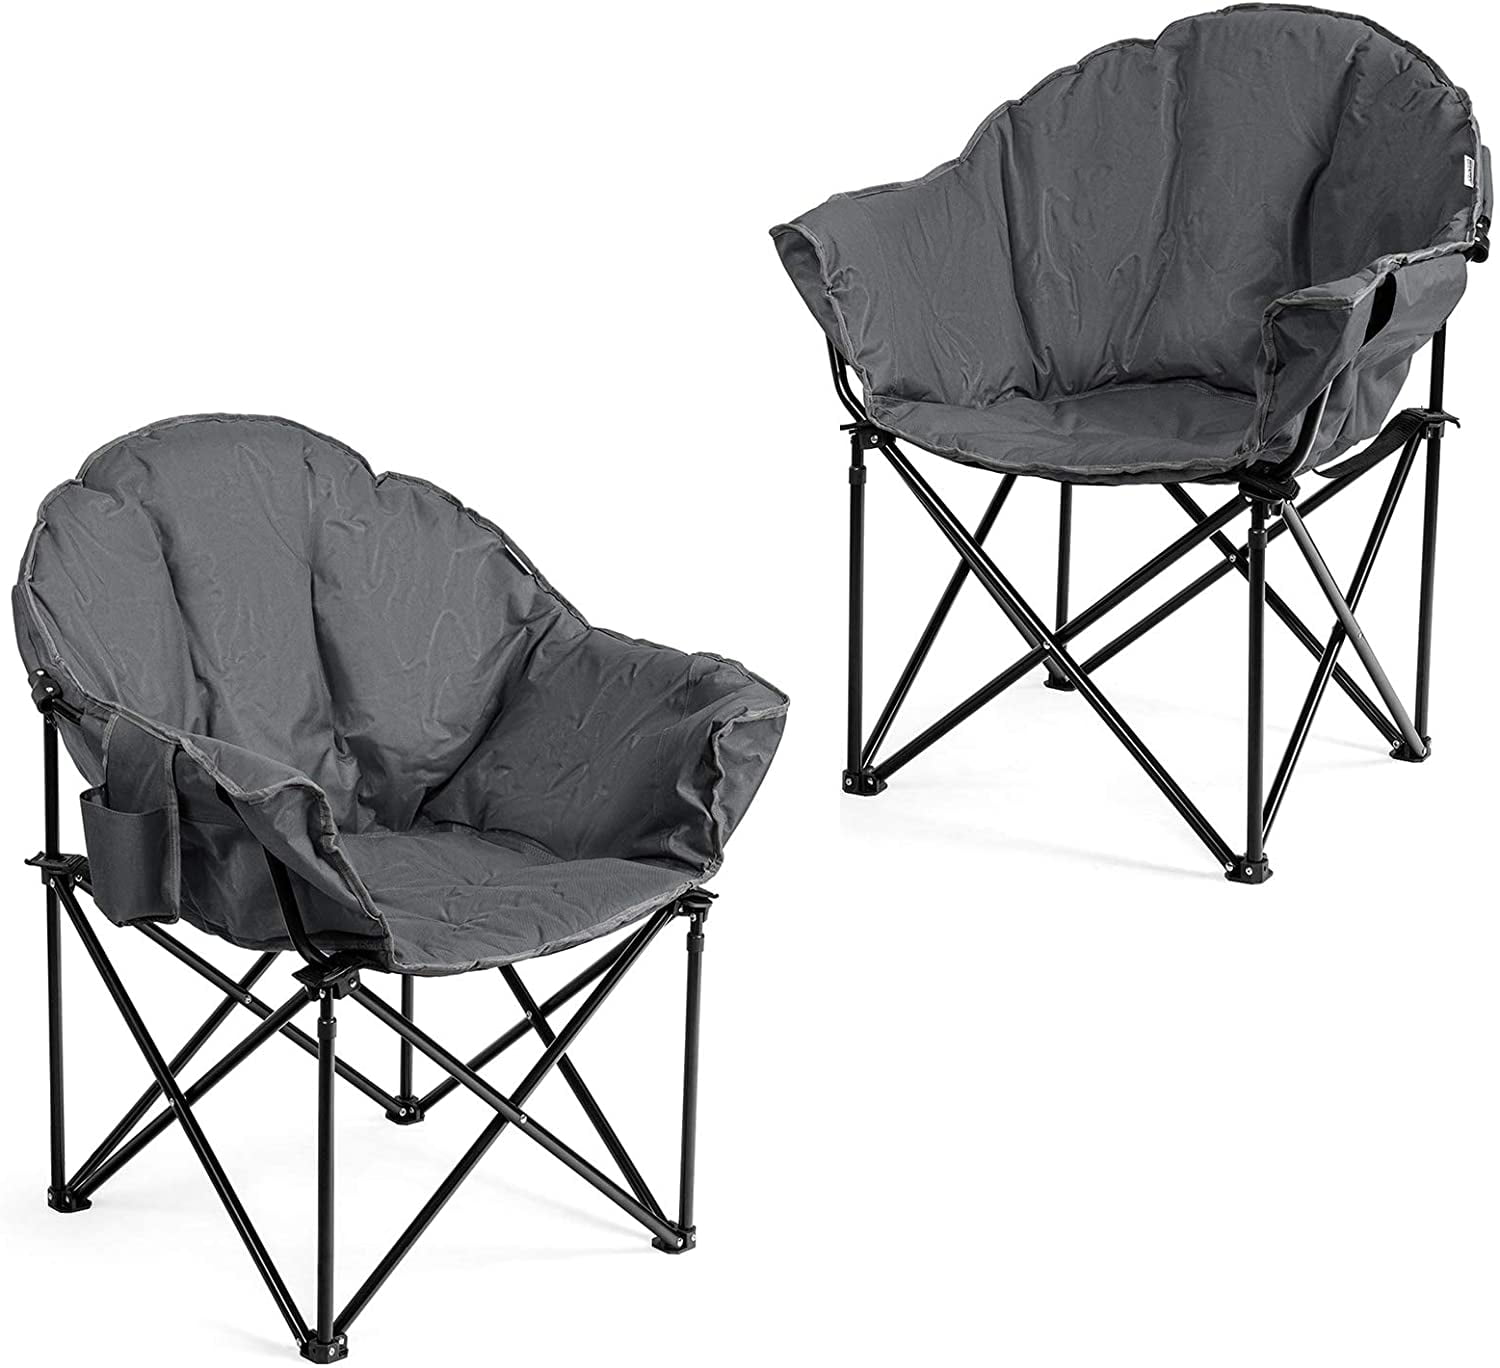 Kids Disney Foldable Moon Chair Moonchair Padded Folding Seat Camping Garden 